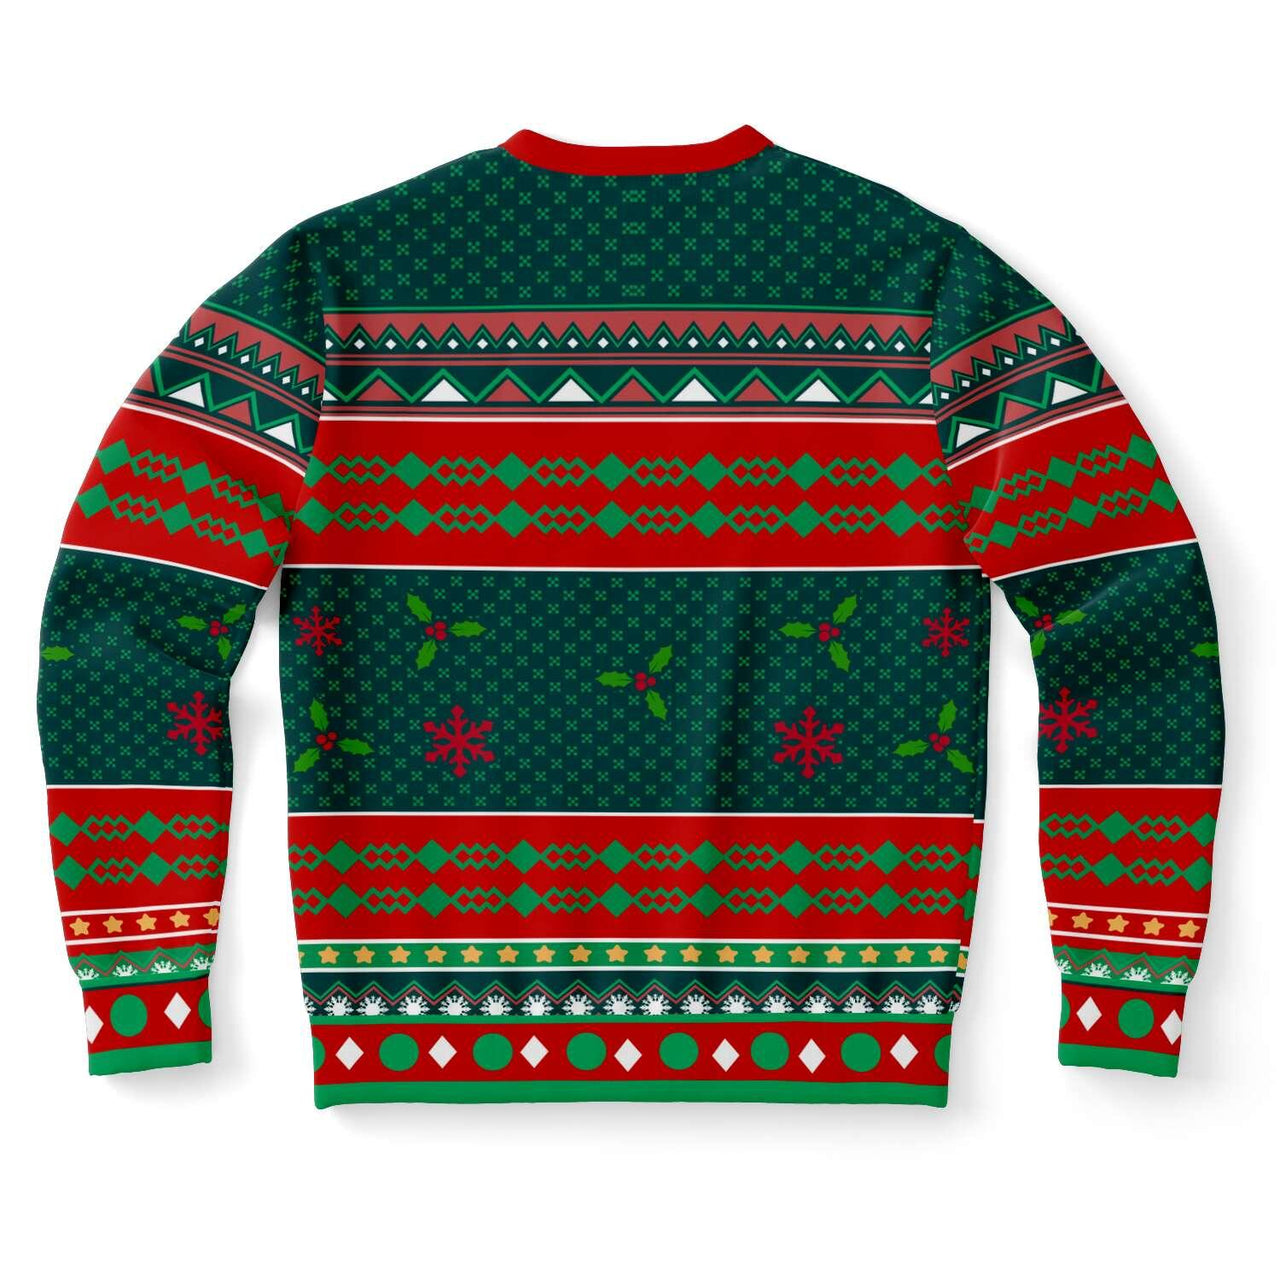 I Put Out For Santa - Ugly Christmas Unisex Sweatshirt - Tranzitions Organic Salon